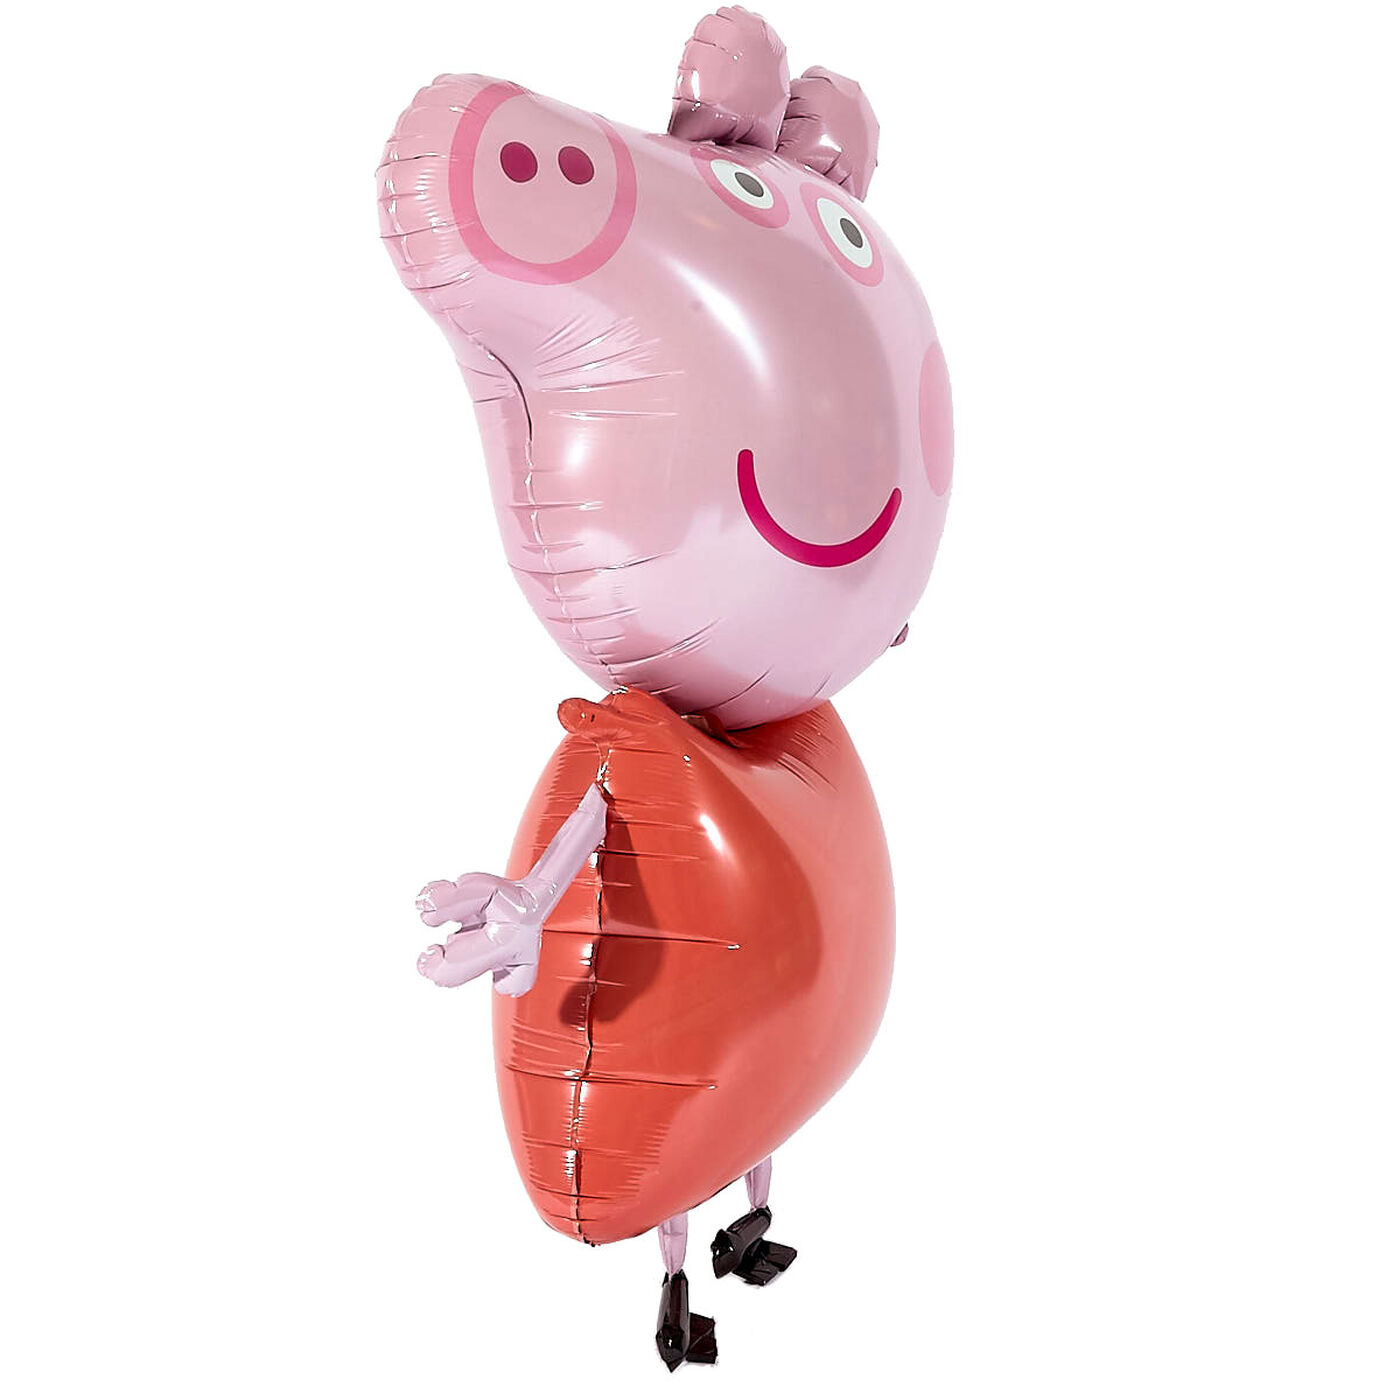 Peppa Pig balloon Airwalker Giant Foil 48 Tall.